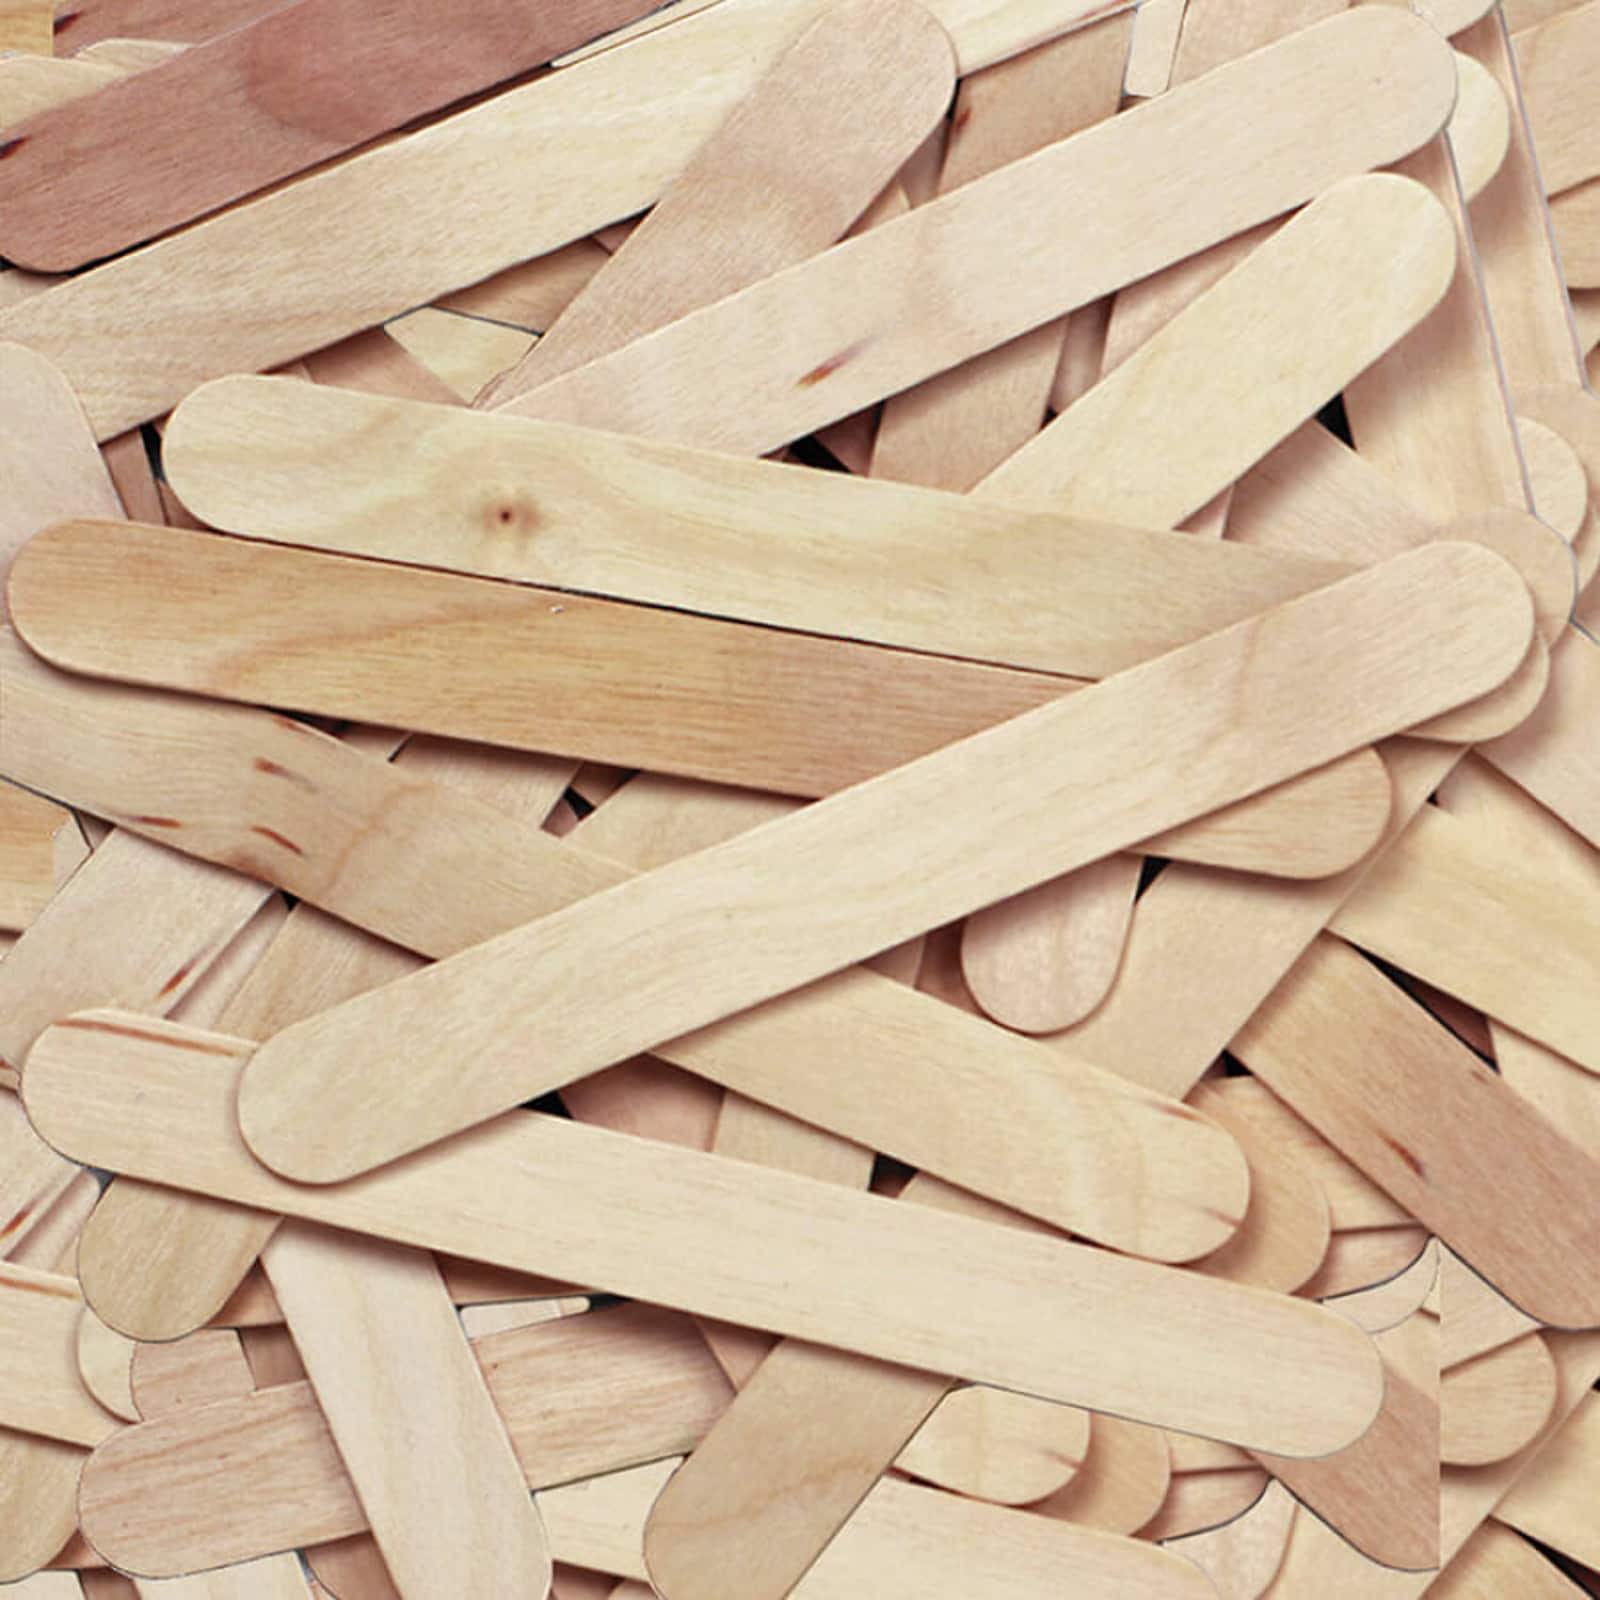 Wood Sticks - 10 Pack